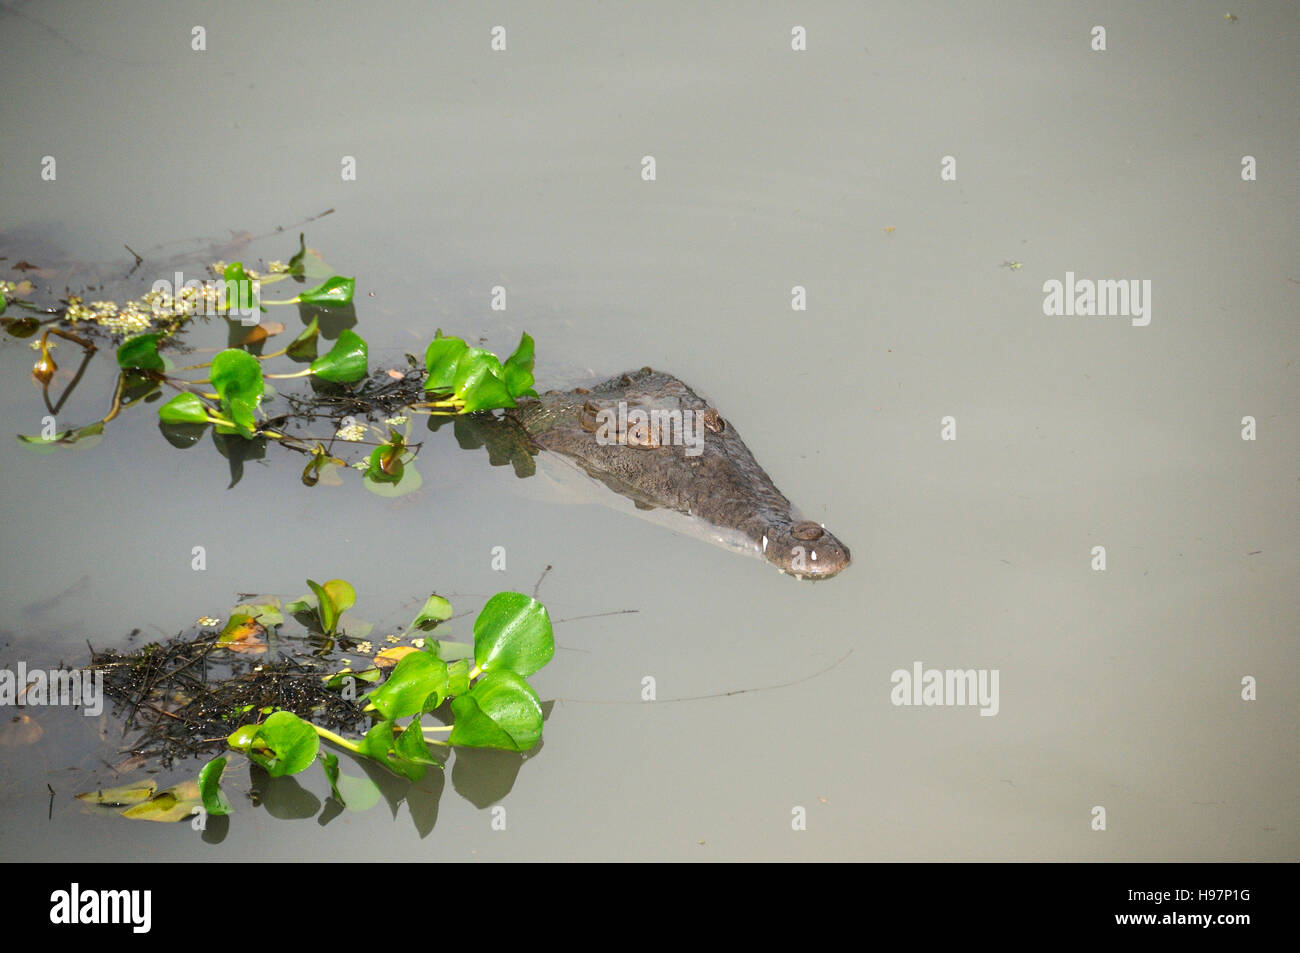 Head of American crocodile in the water, Rainforest, Gamboa, Panama Stock Photo